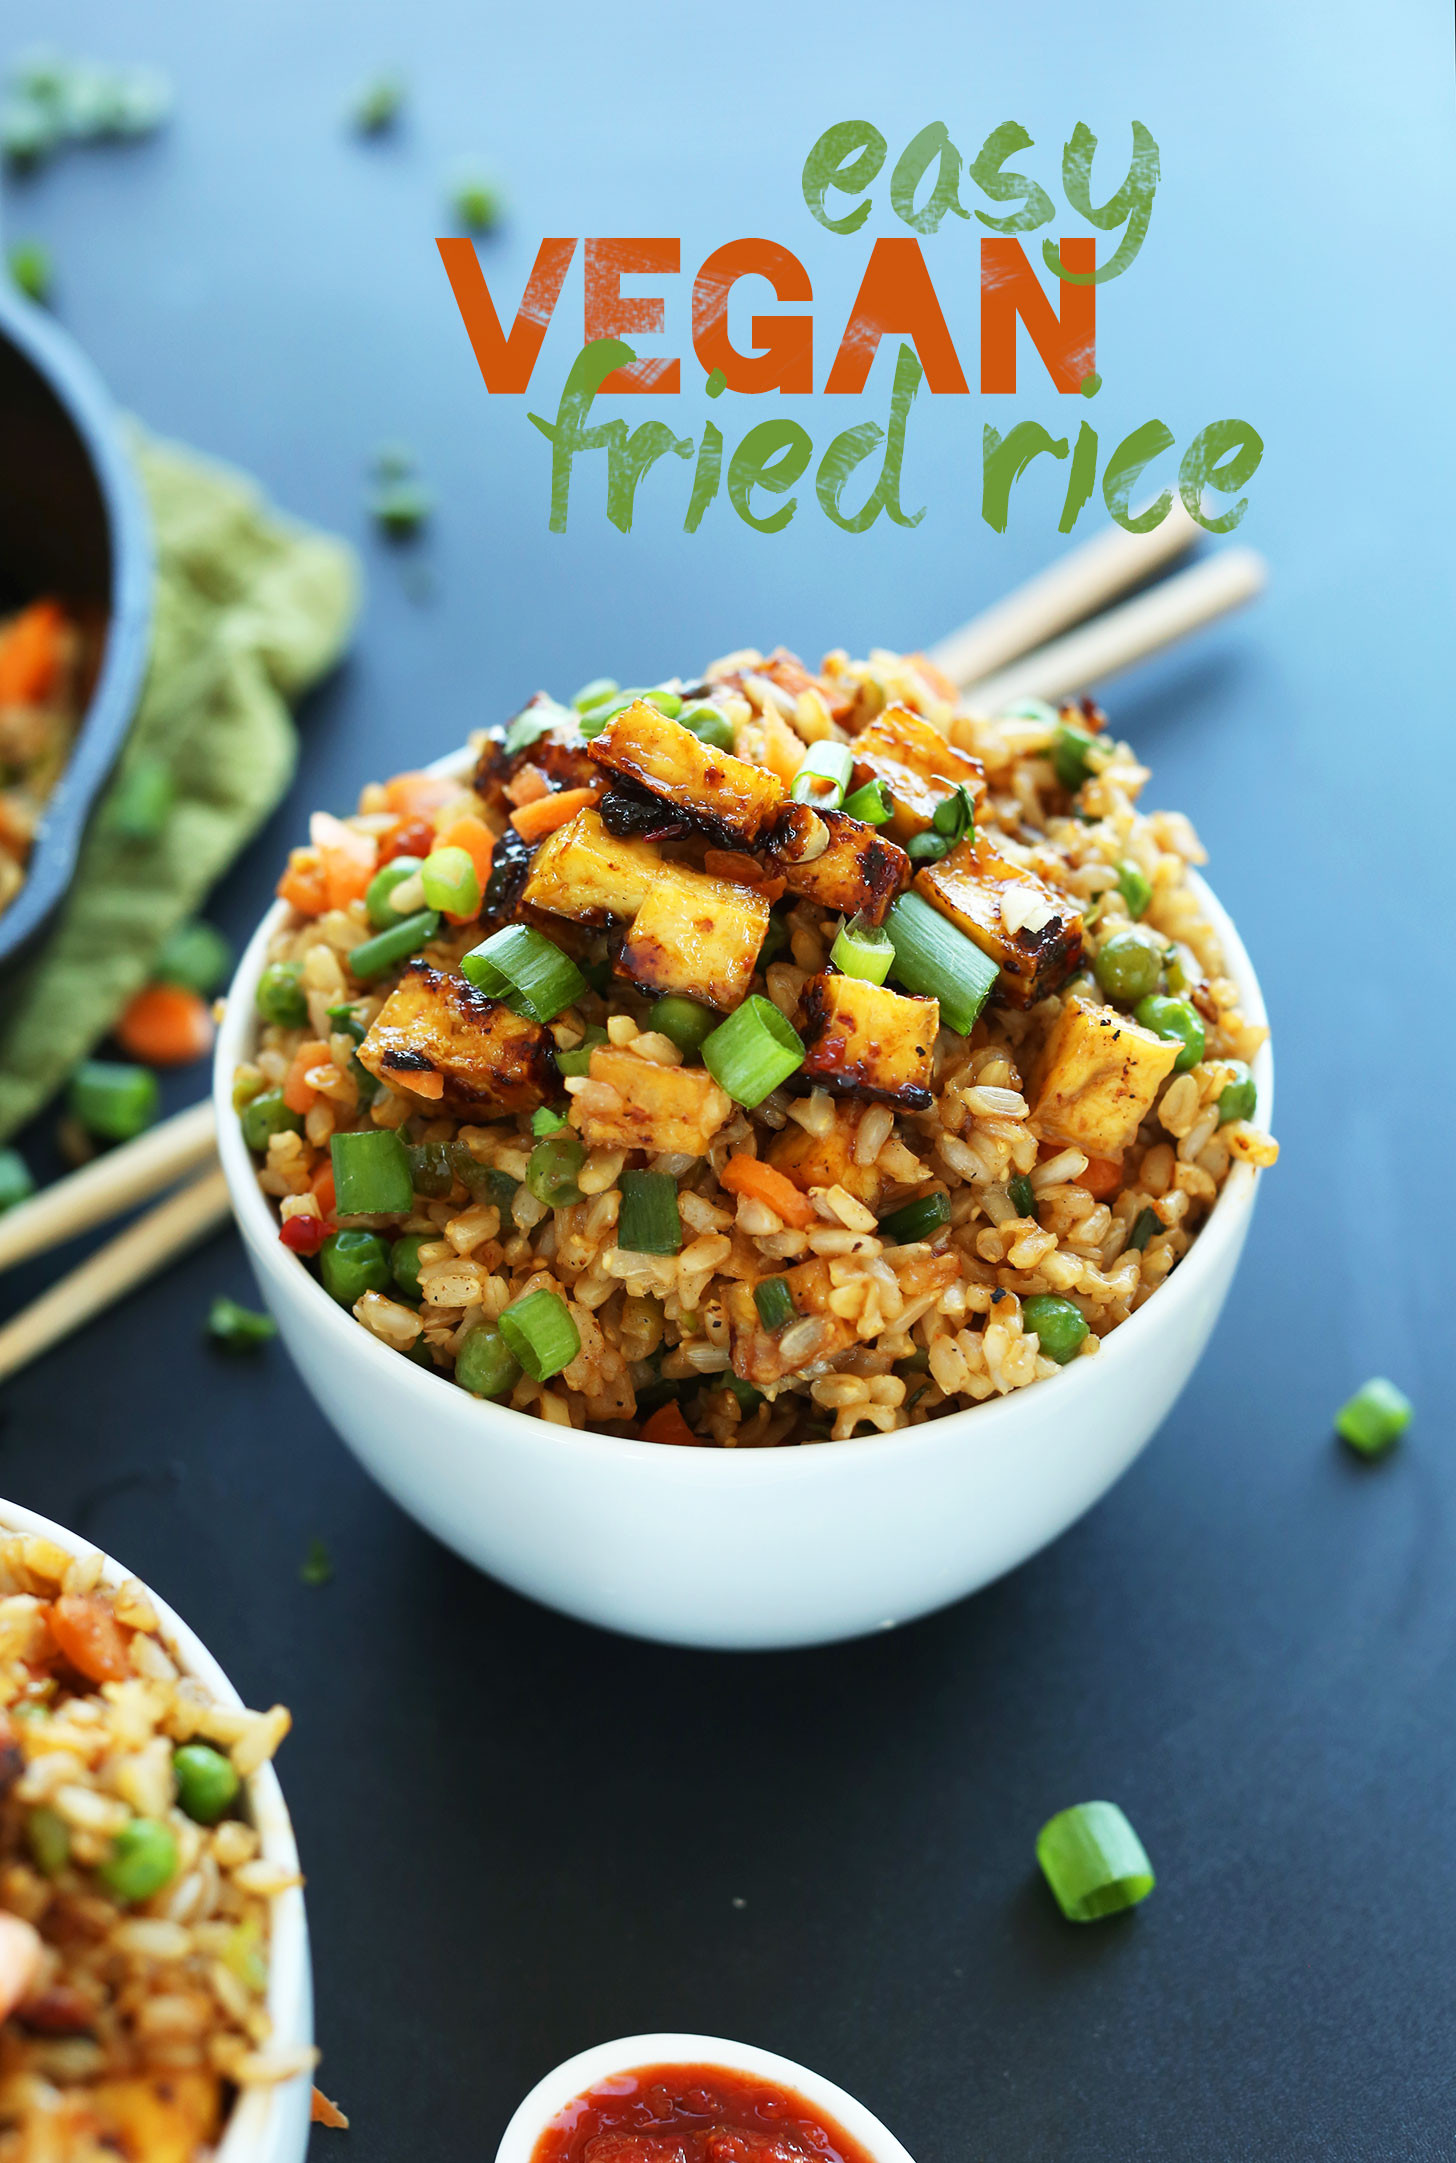 Vegetarian Recipes With Tofu
 Vegan Fried Rice